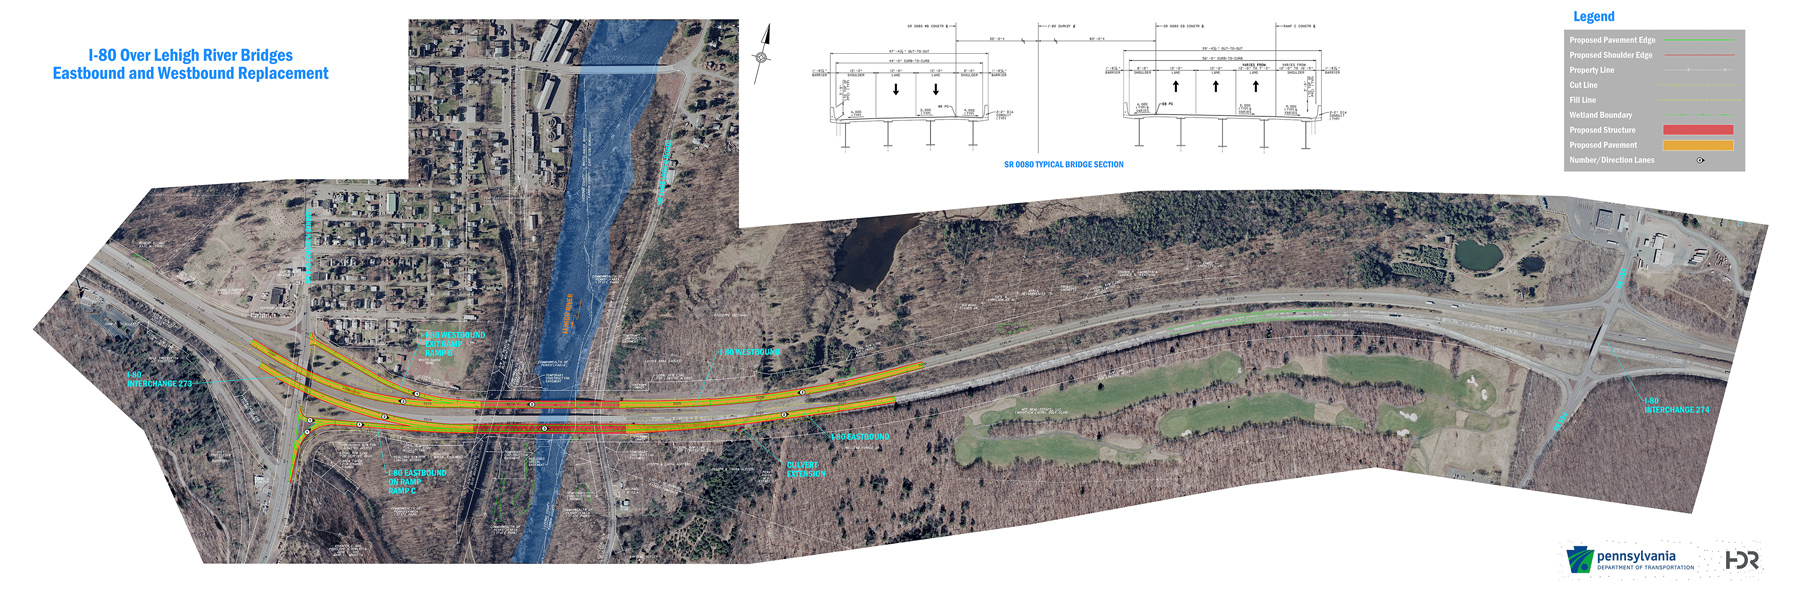 i-80 over lehigh river bridge project design plan map